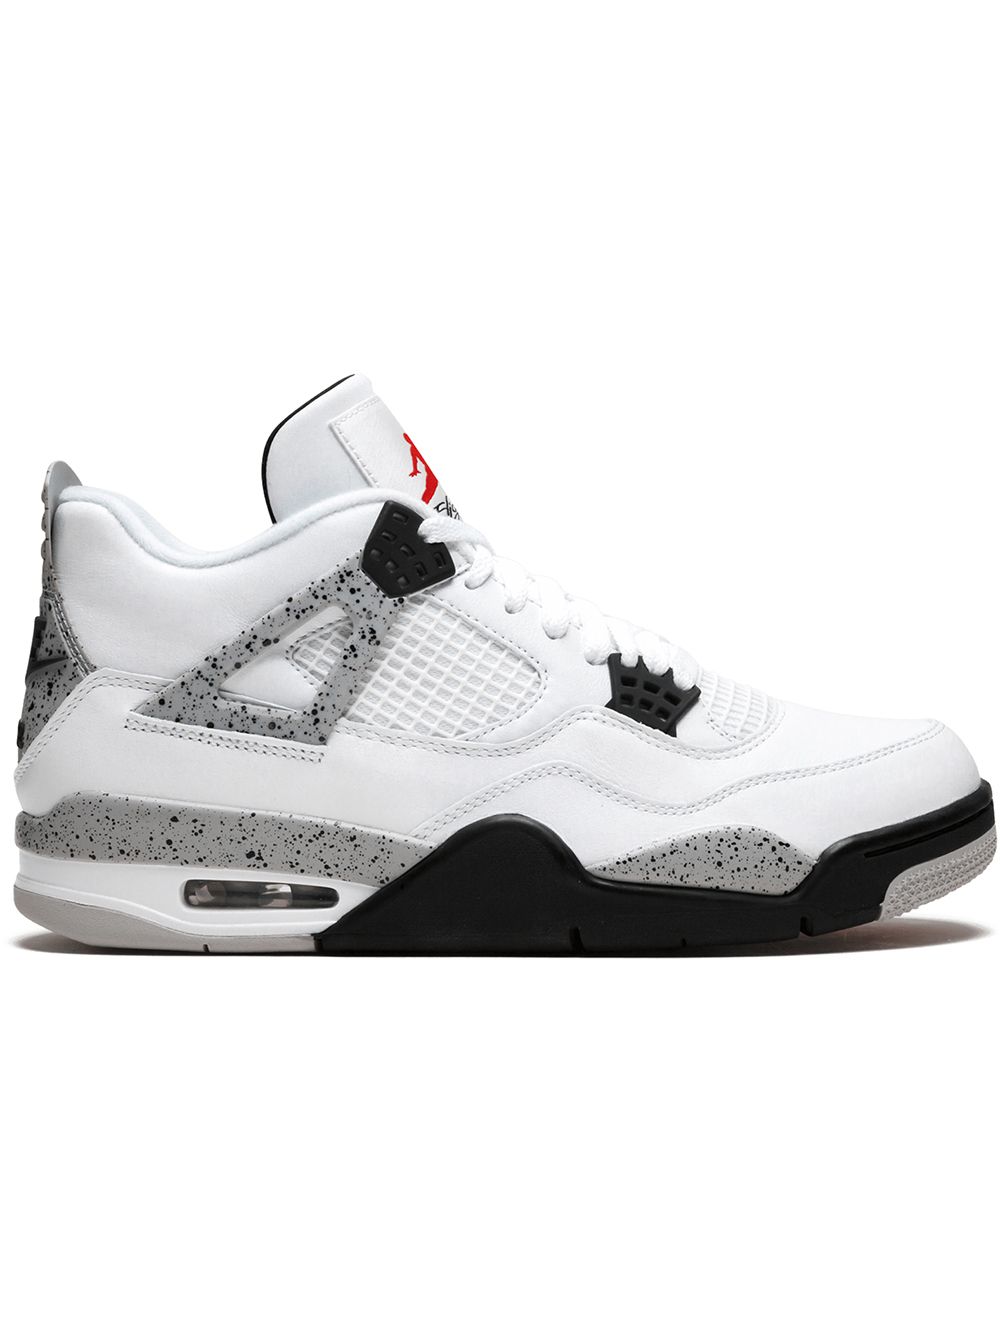 Jordan Air Jordan 4 Retro OG "White Cement" sneakers